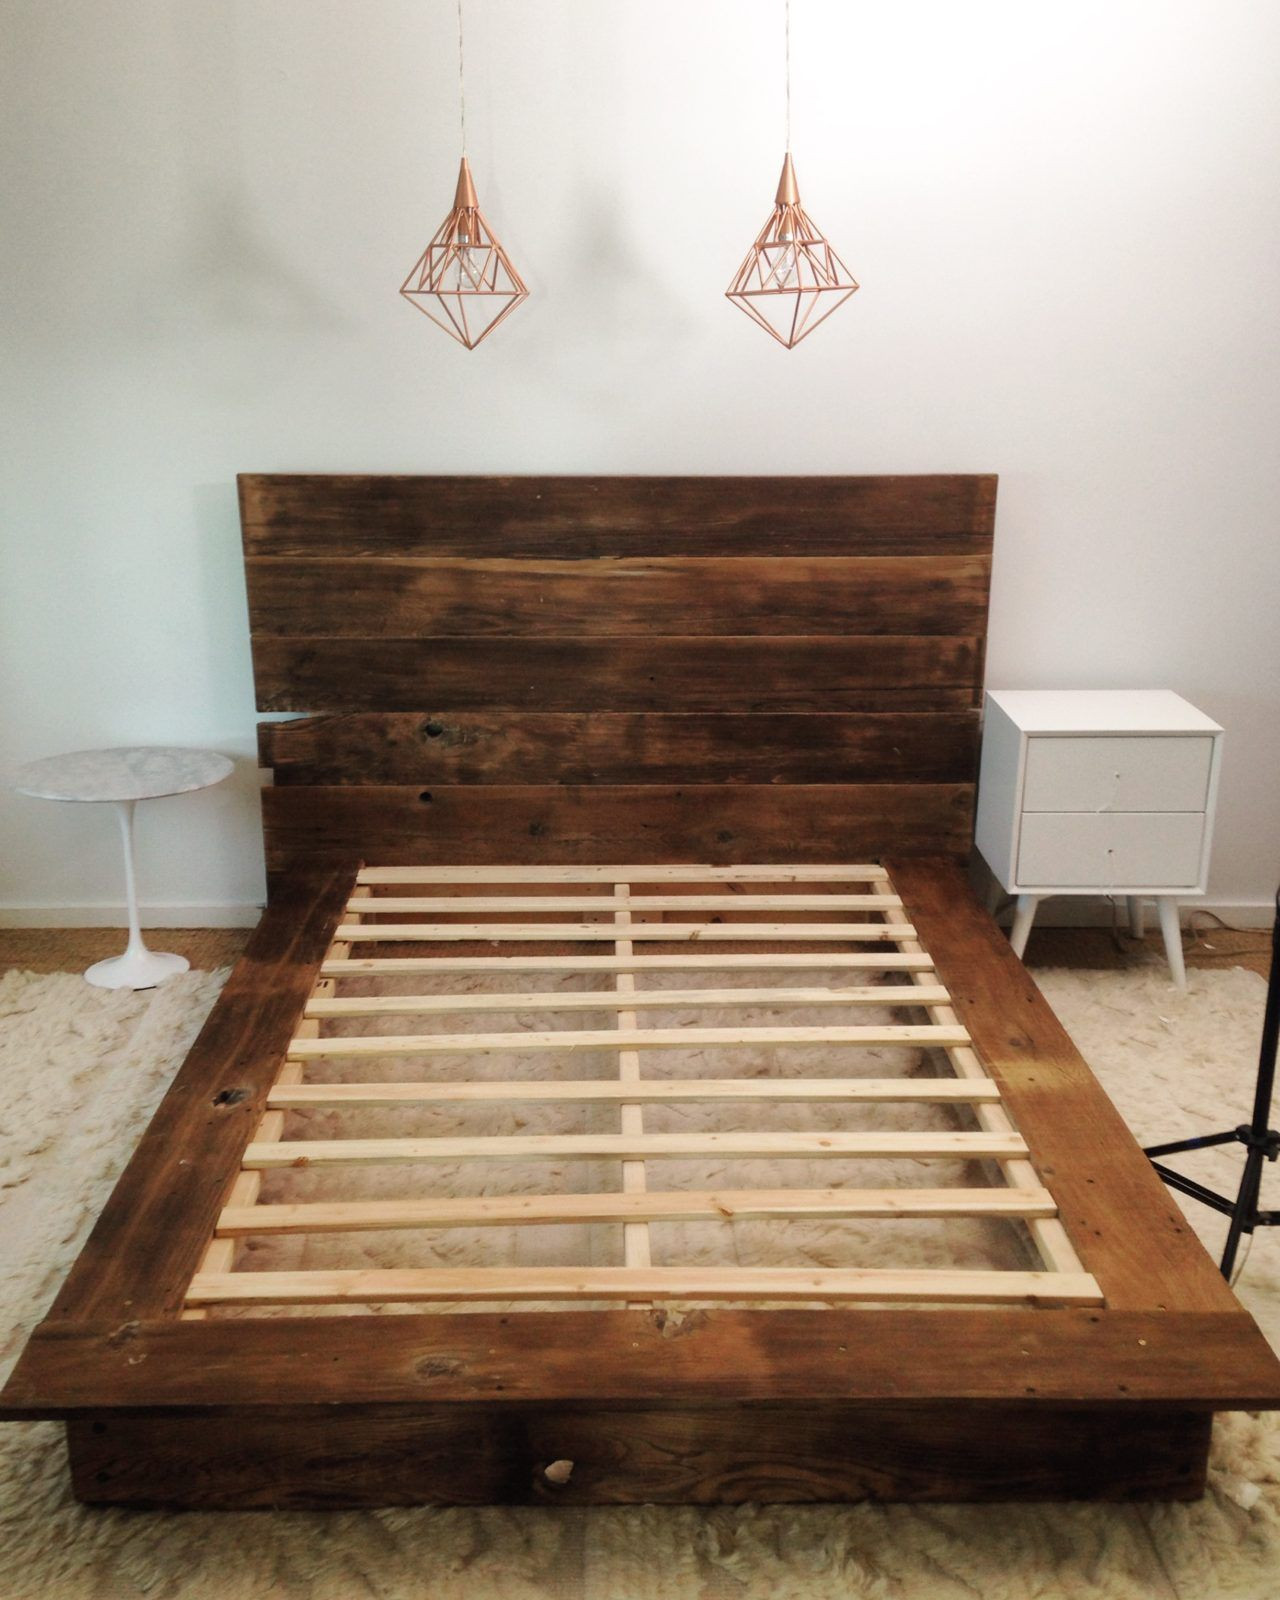 DIY Wooden Beds
 DIY Reclaimed Wood Platform Bed in 2019 Home